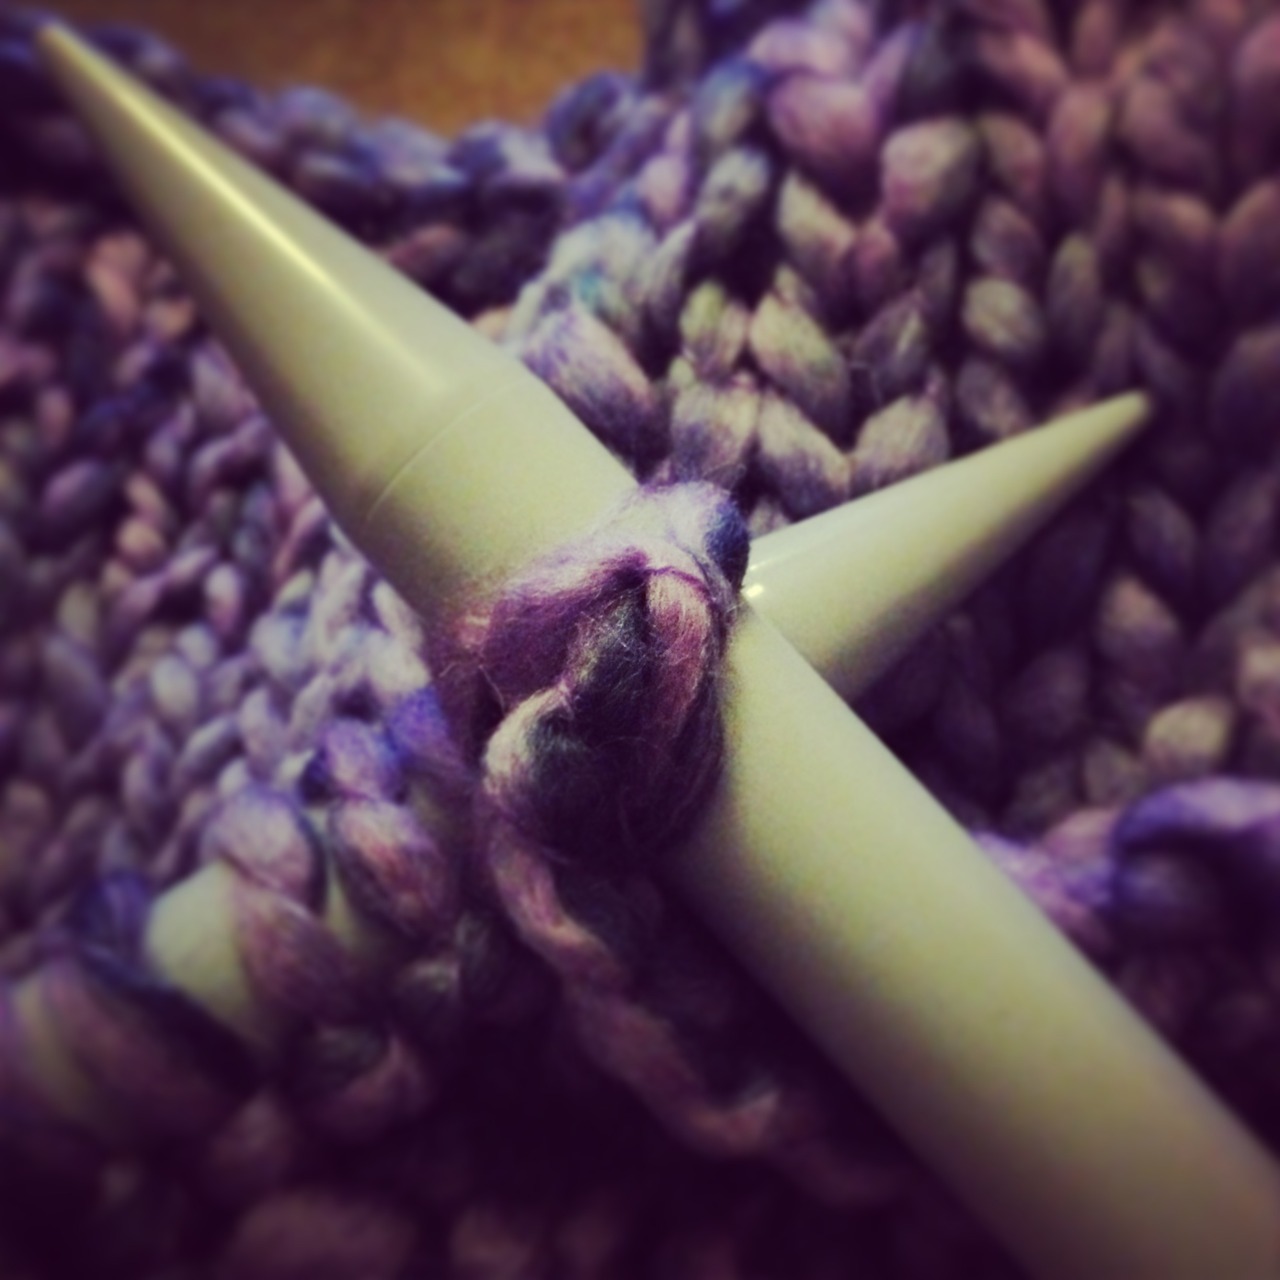 knitted knitting needles free photo